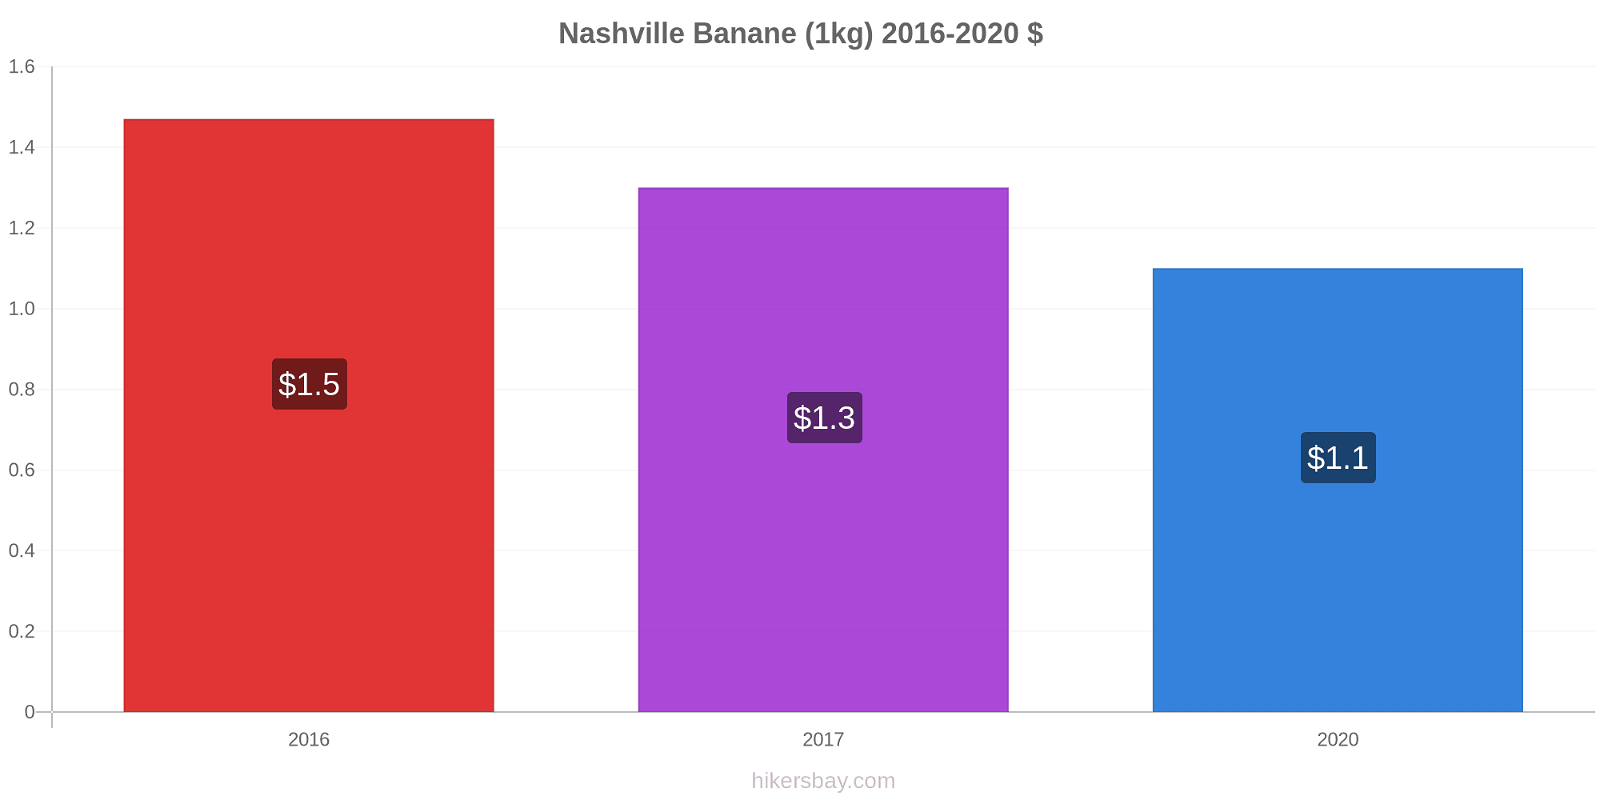 Nashville variazioni di prezzo Banana (1kg) hikersbay.com